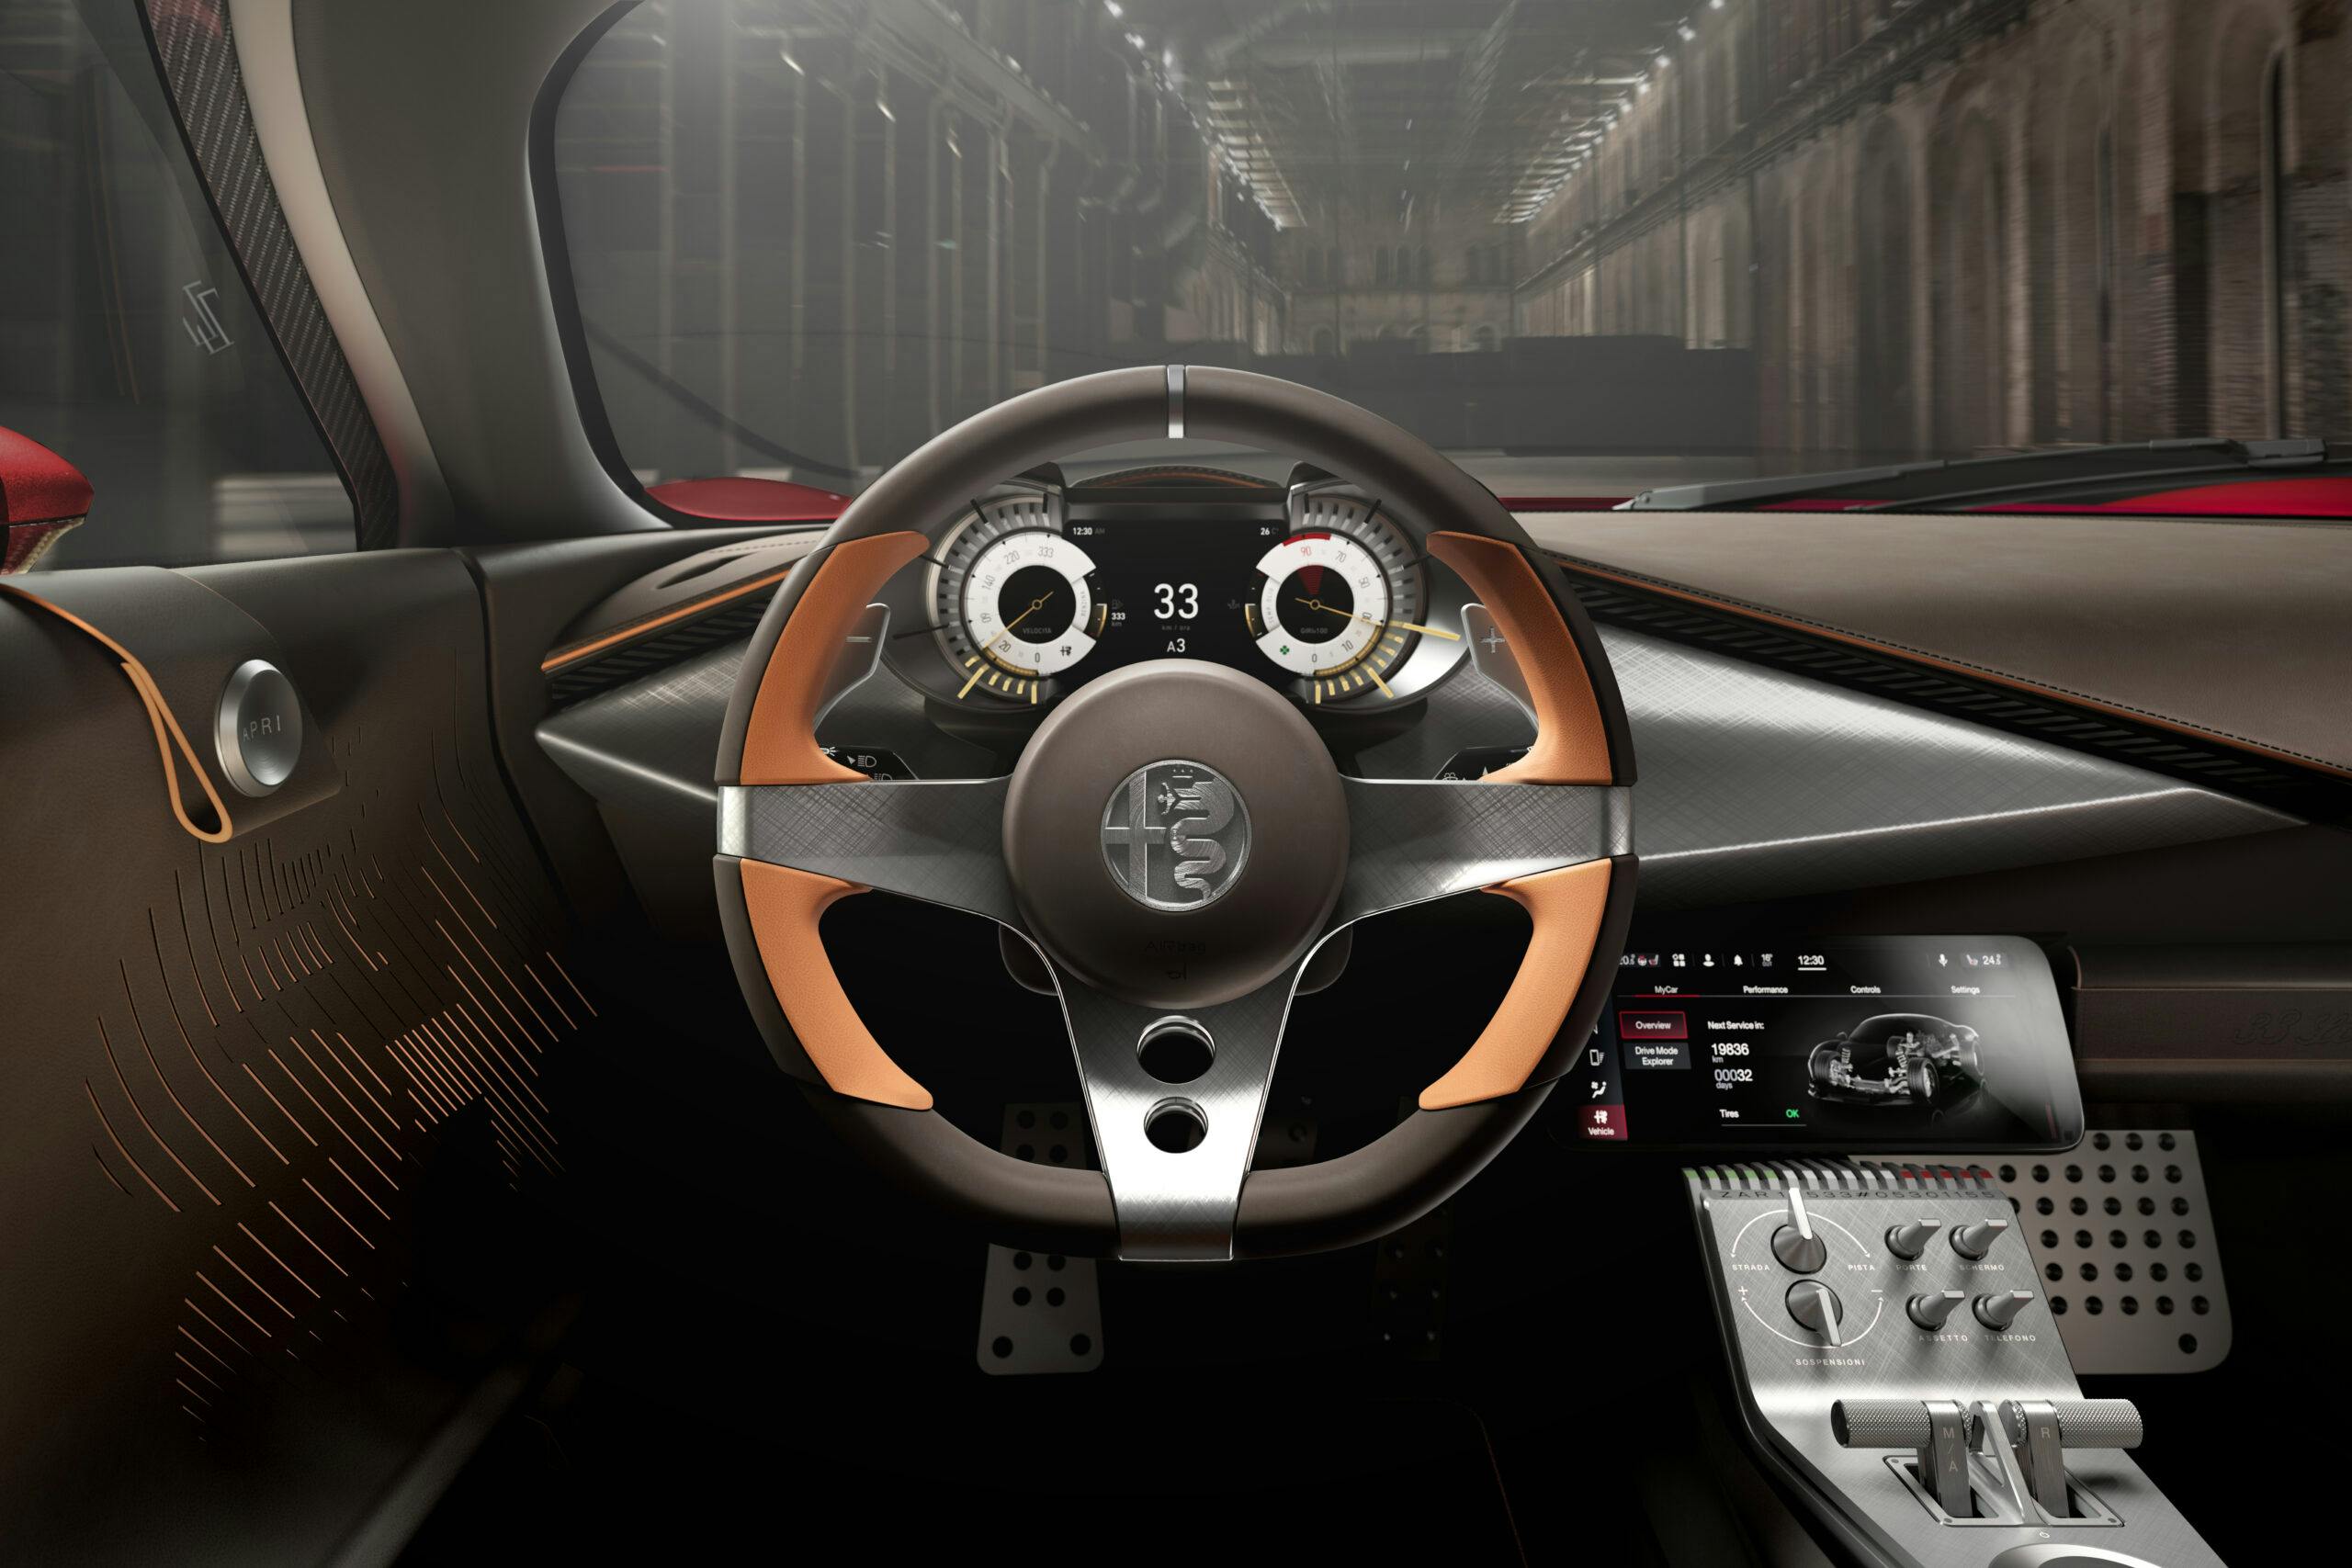 Alfa Romeo Supercar interior driver cockpit 33 stradale